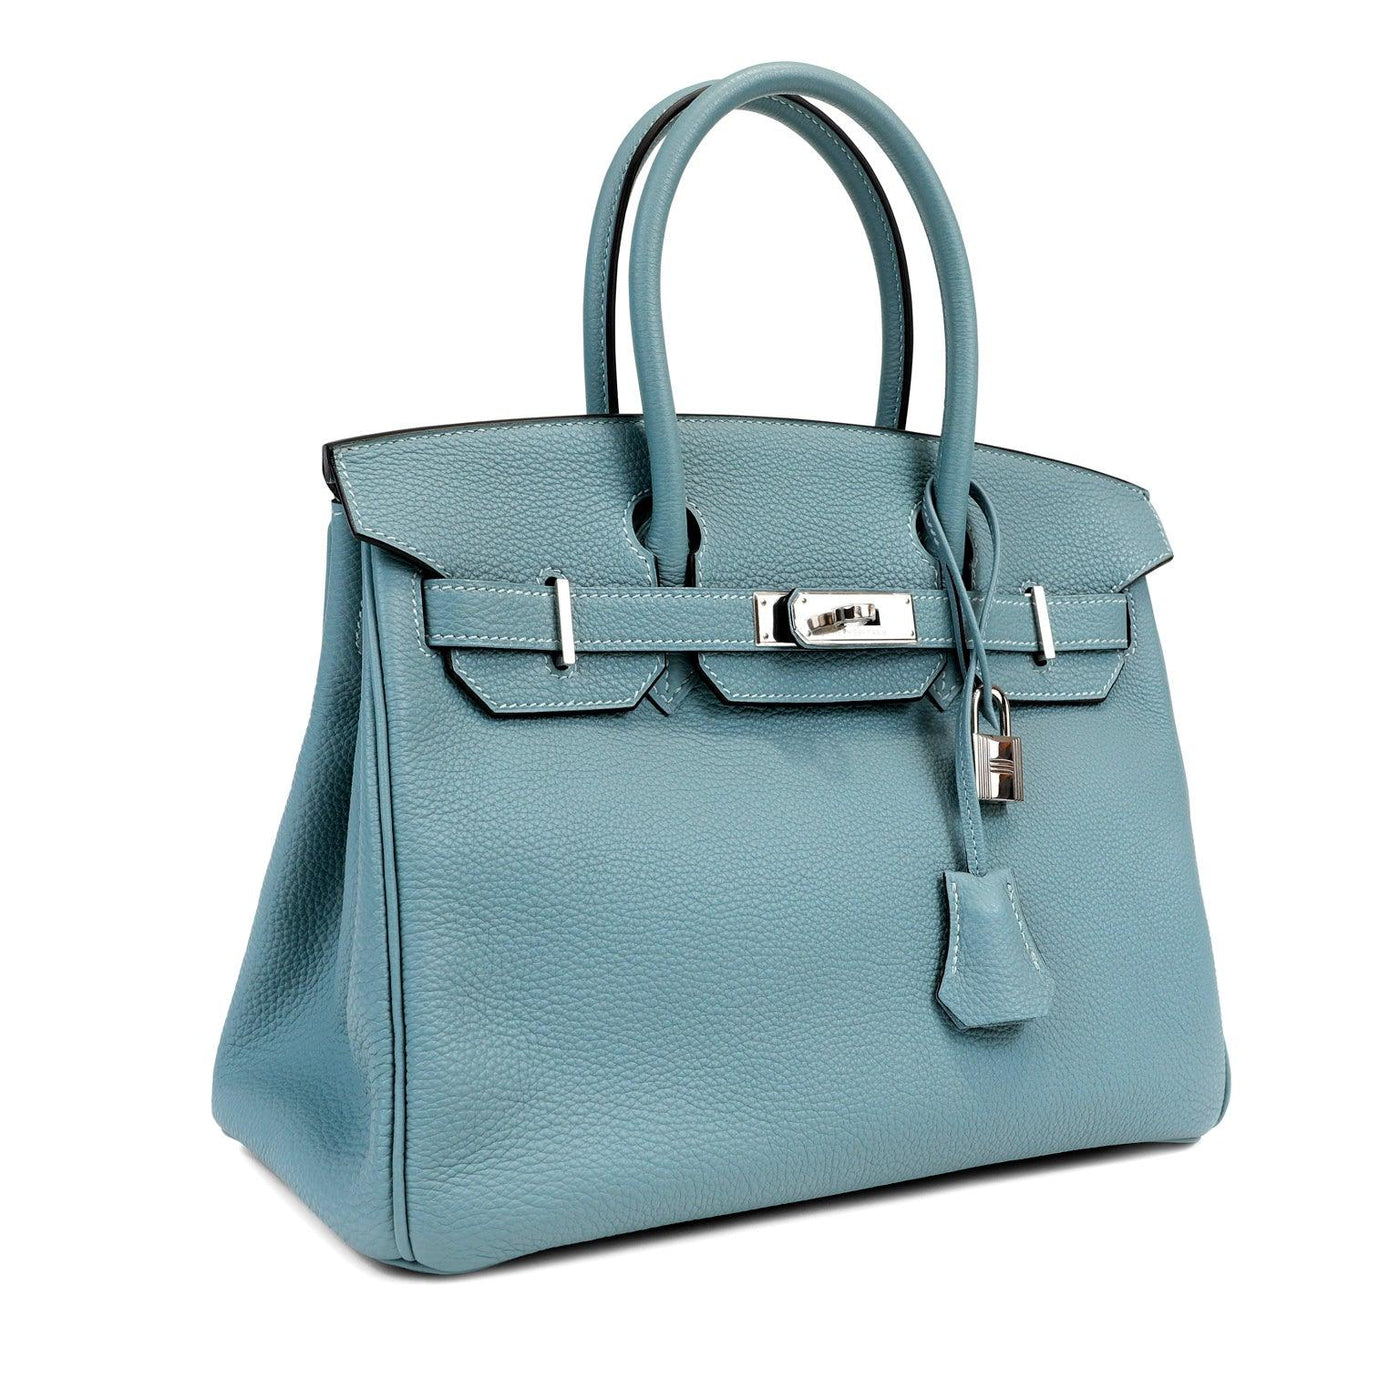 Hermès 30cm Blue Sky Togo Birkin Bag - Only Authentics